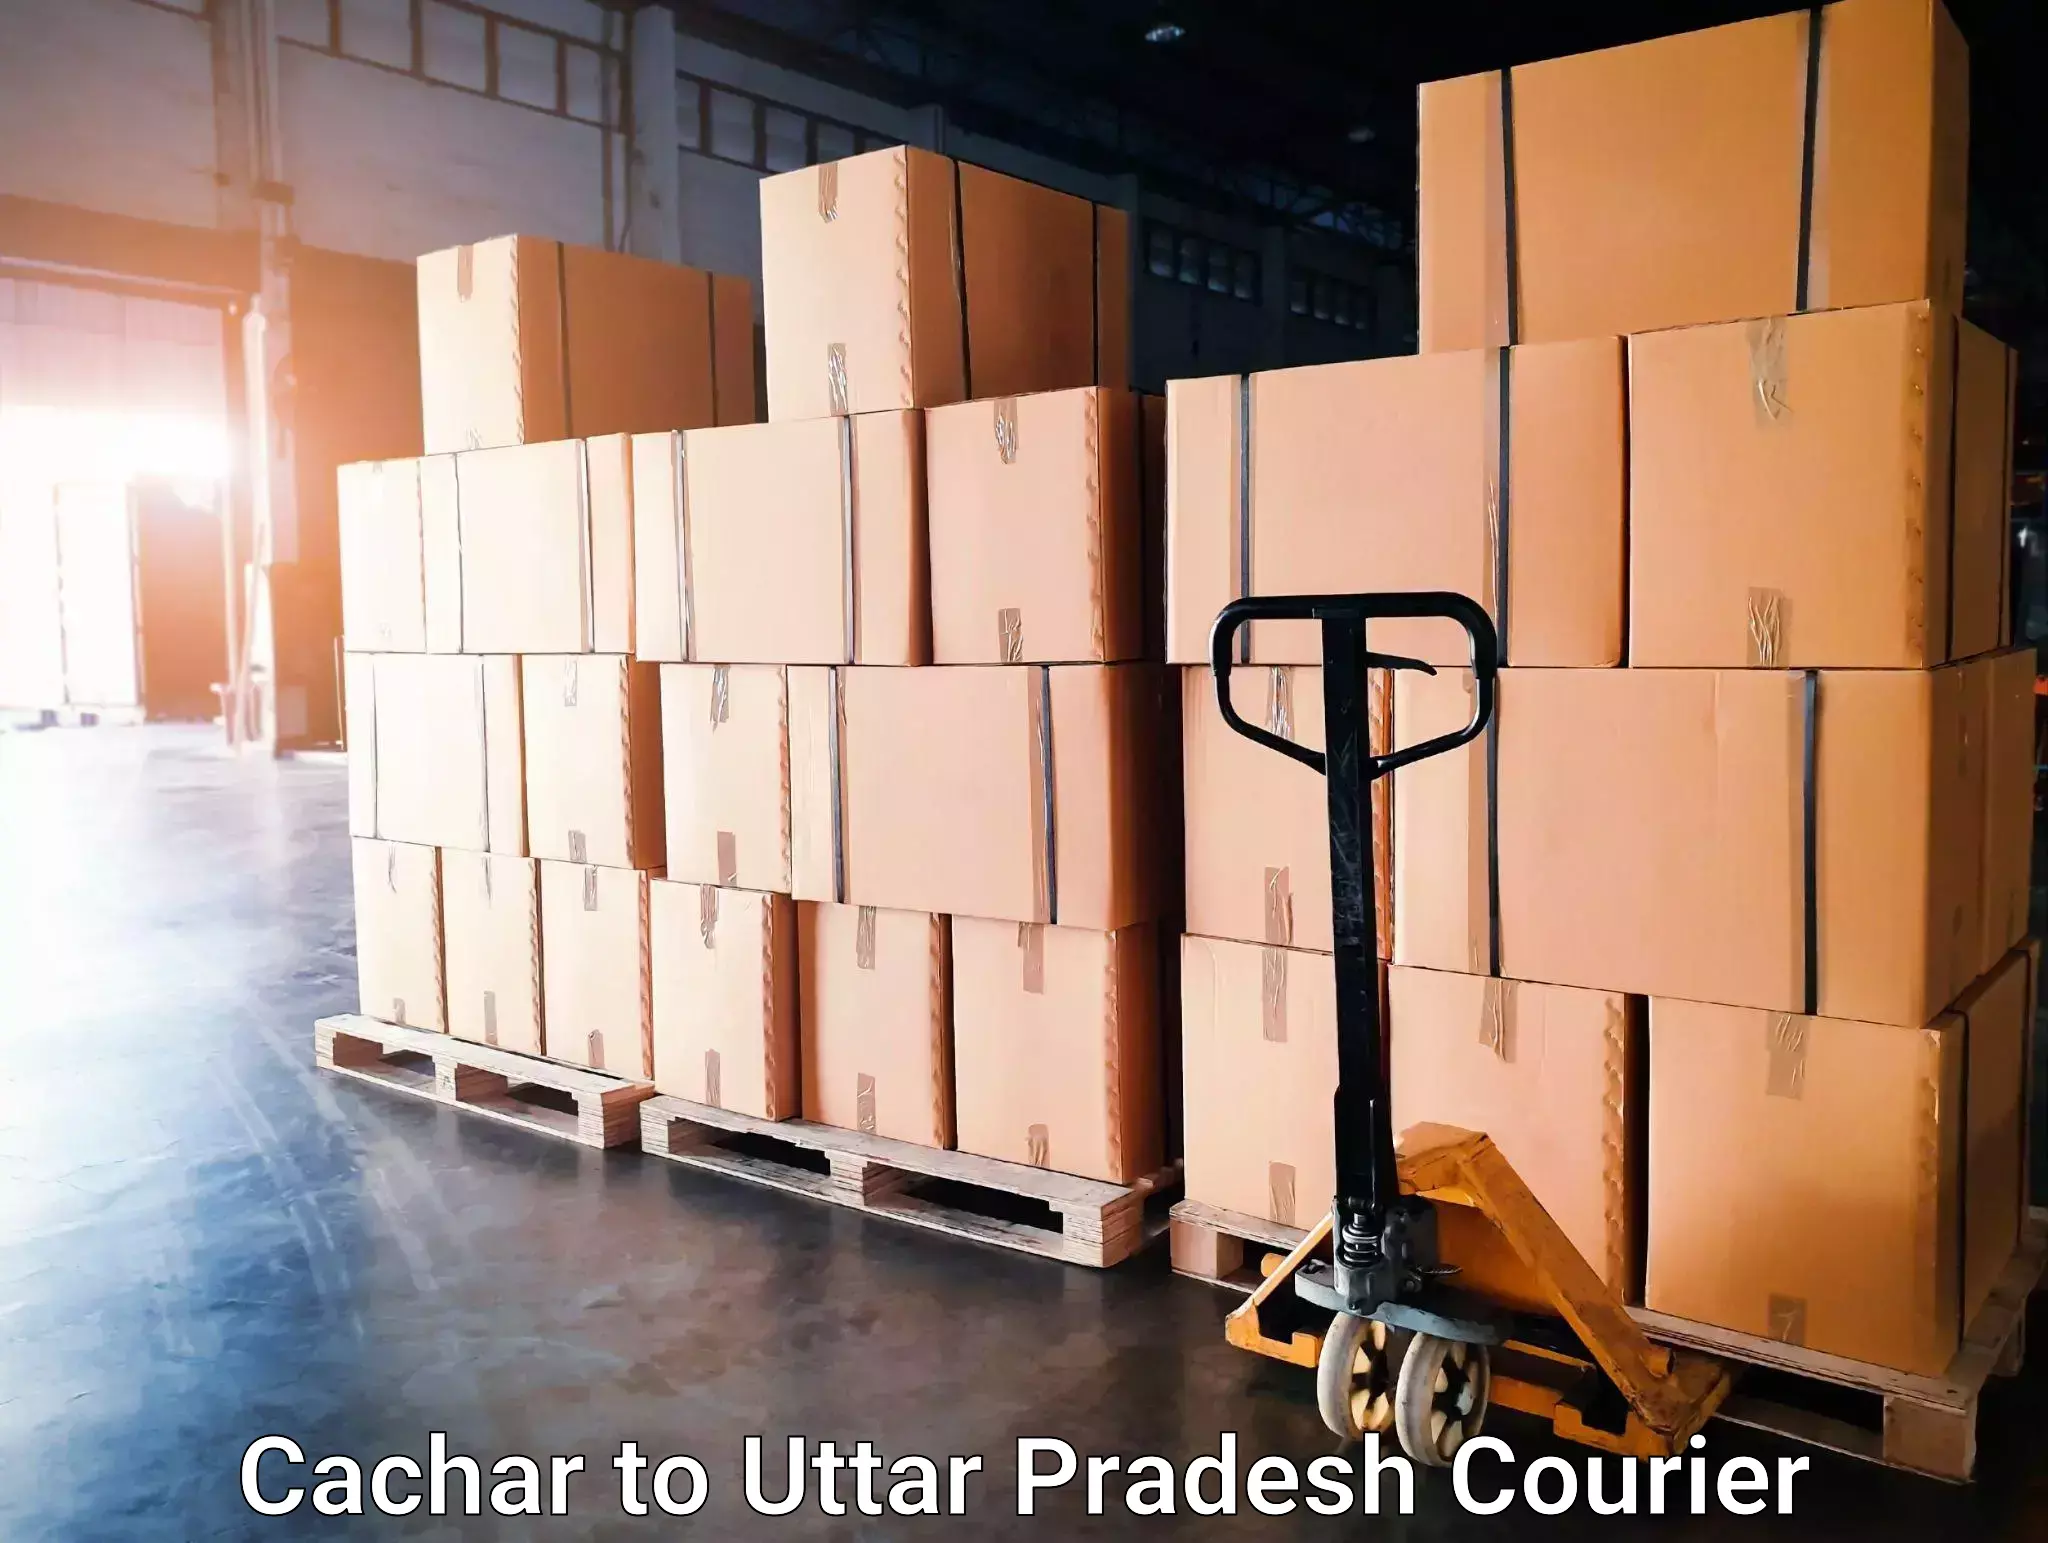 Flexible delivery schedules Cachar to Uttar Pradesh